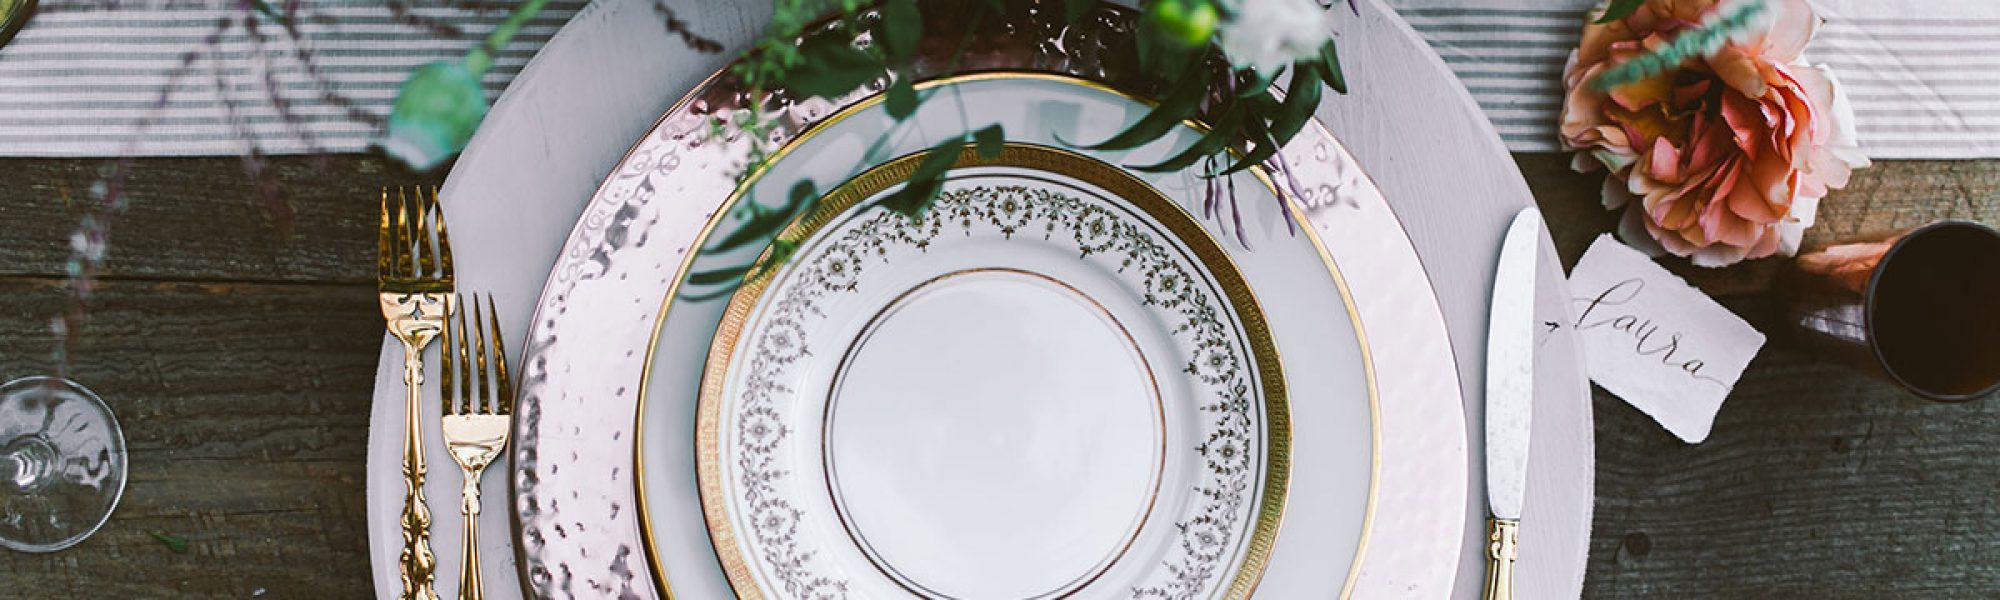 wedding rentals, plates, utensils, flatware